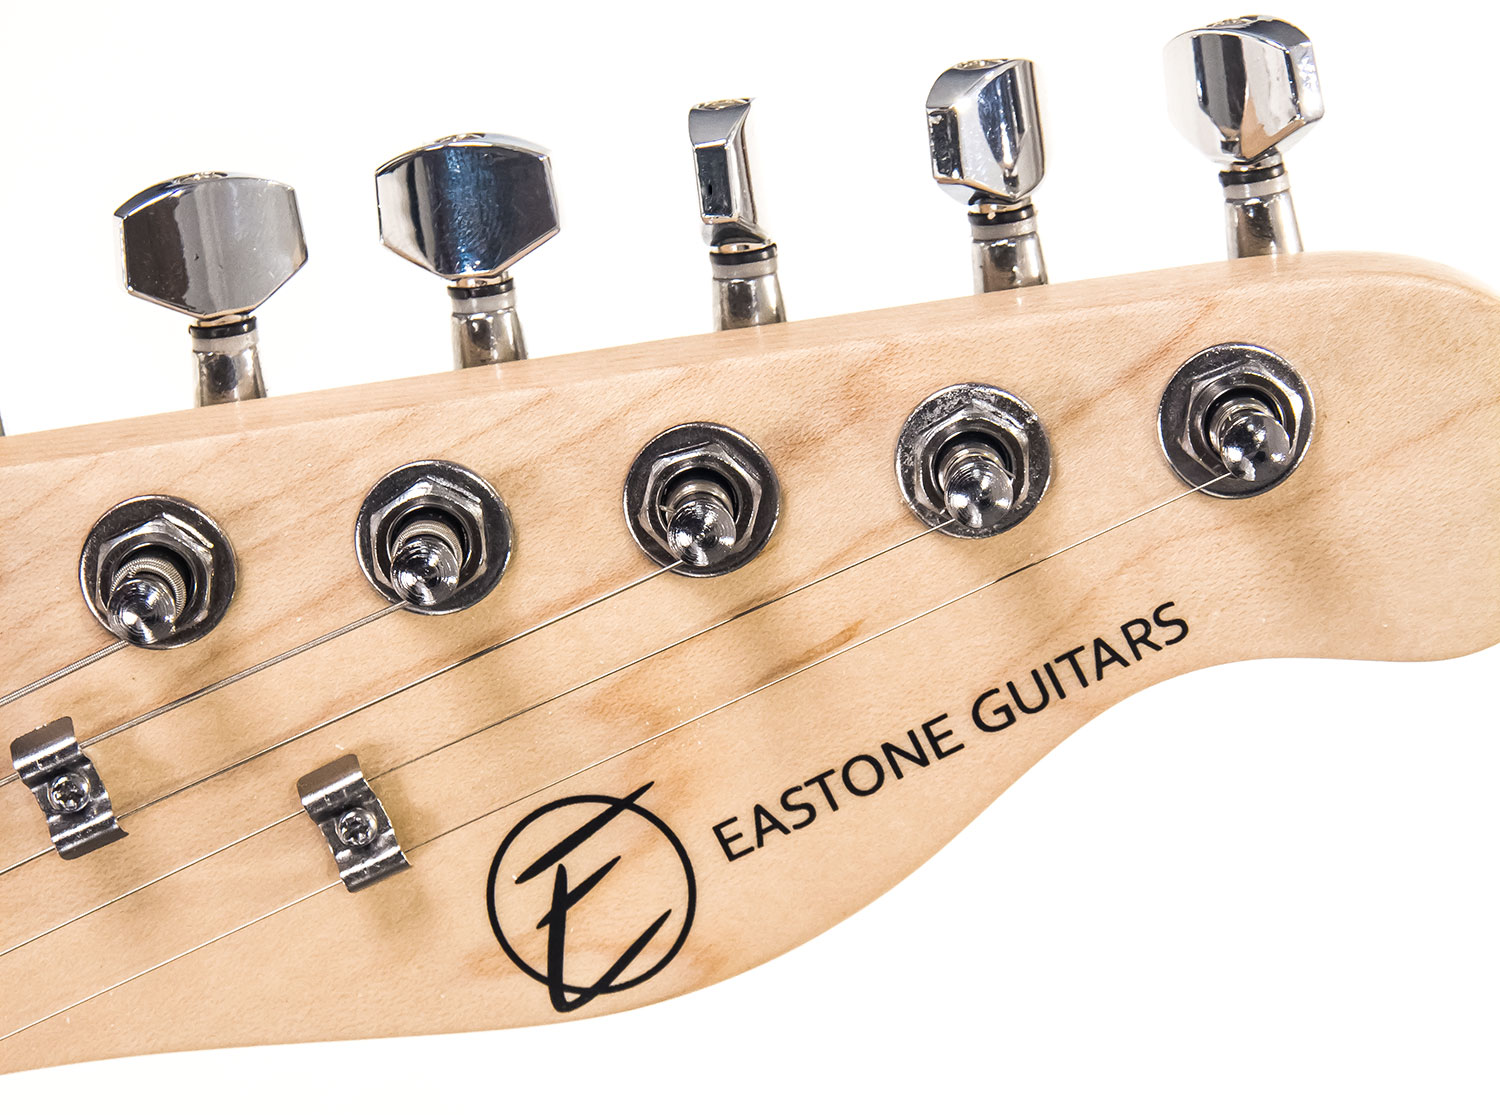 Eastone Tl70 Ss Ht Pur - 3 Tone Sunburst - Guitarra eléctrica con forma de tel - Variation 4